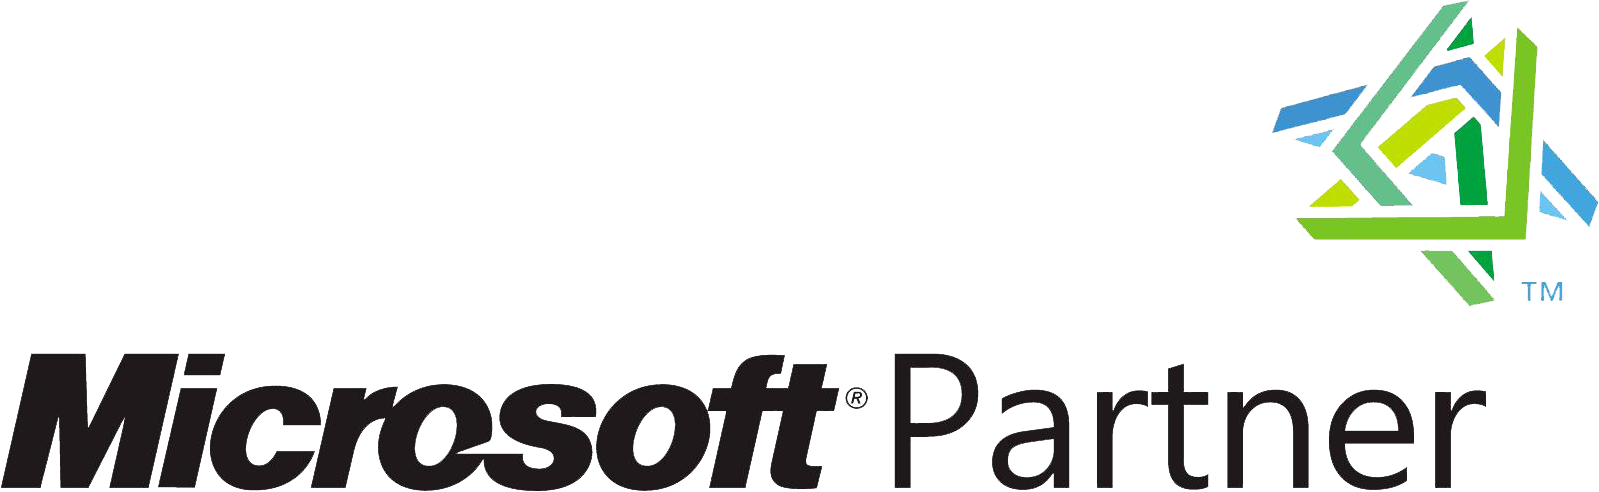 Image result for microsoft partner logo